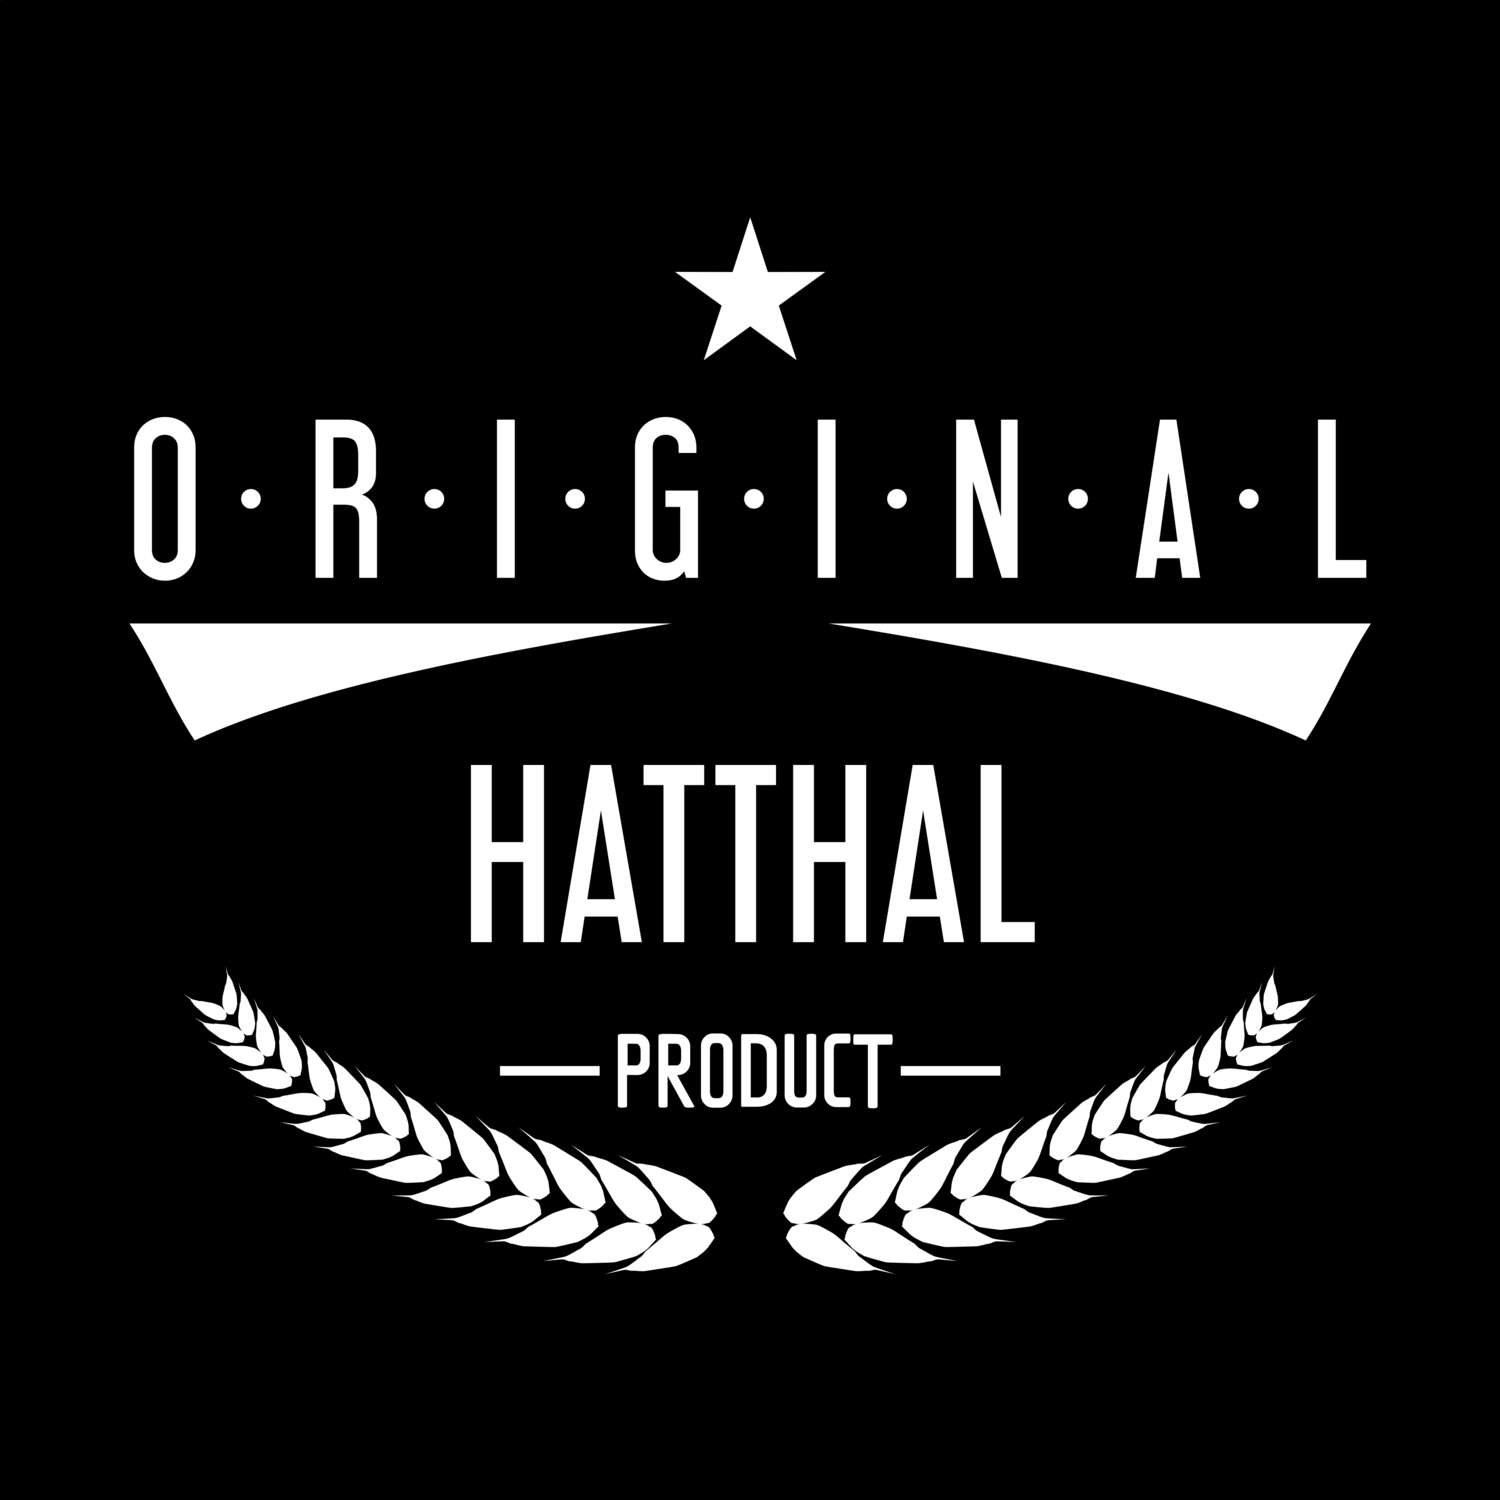 Hatthal T-Shirt »Original Product«